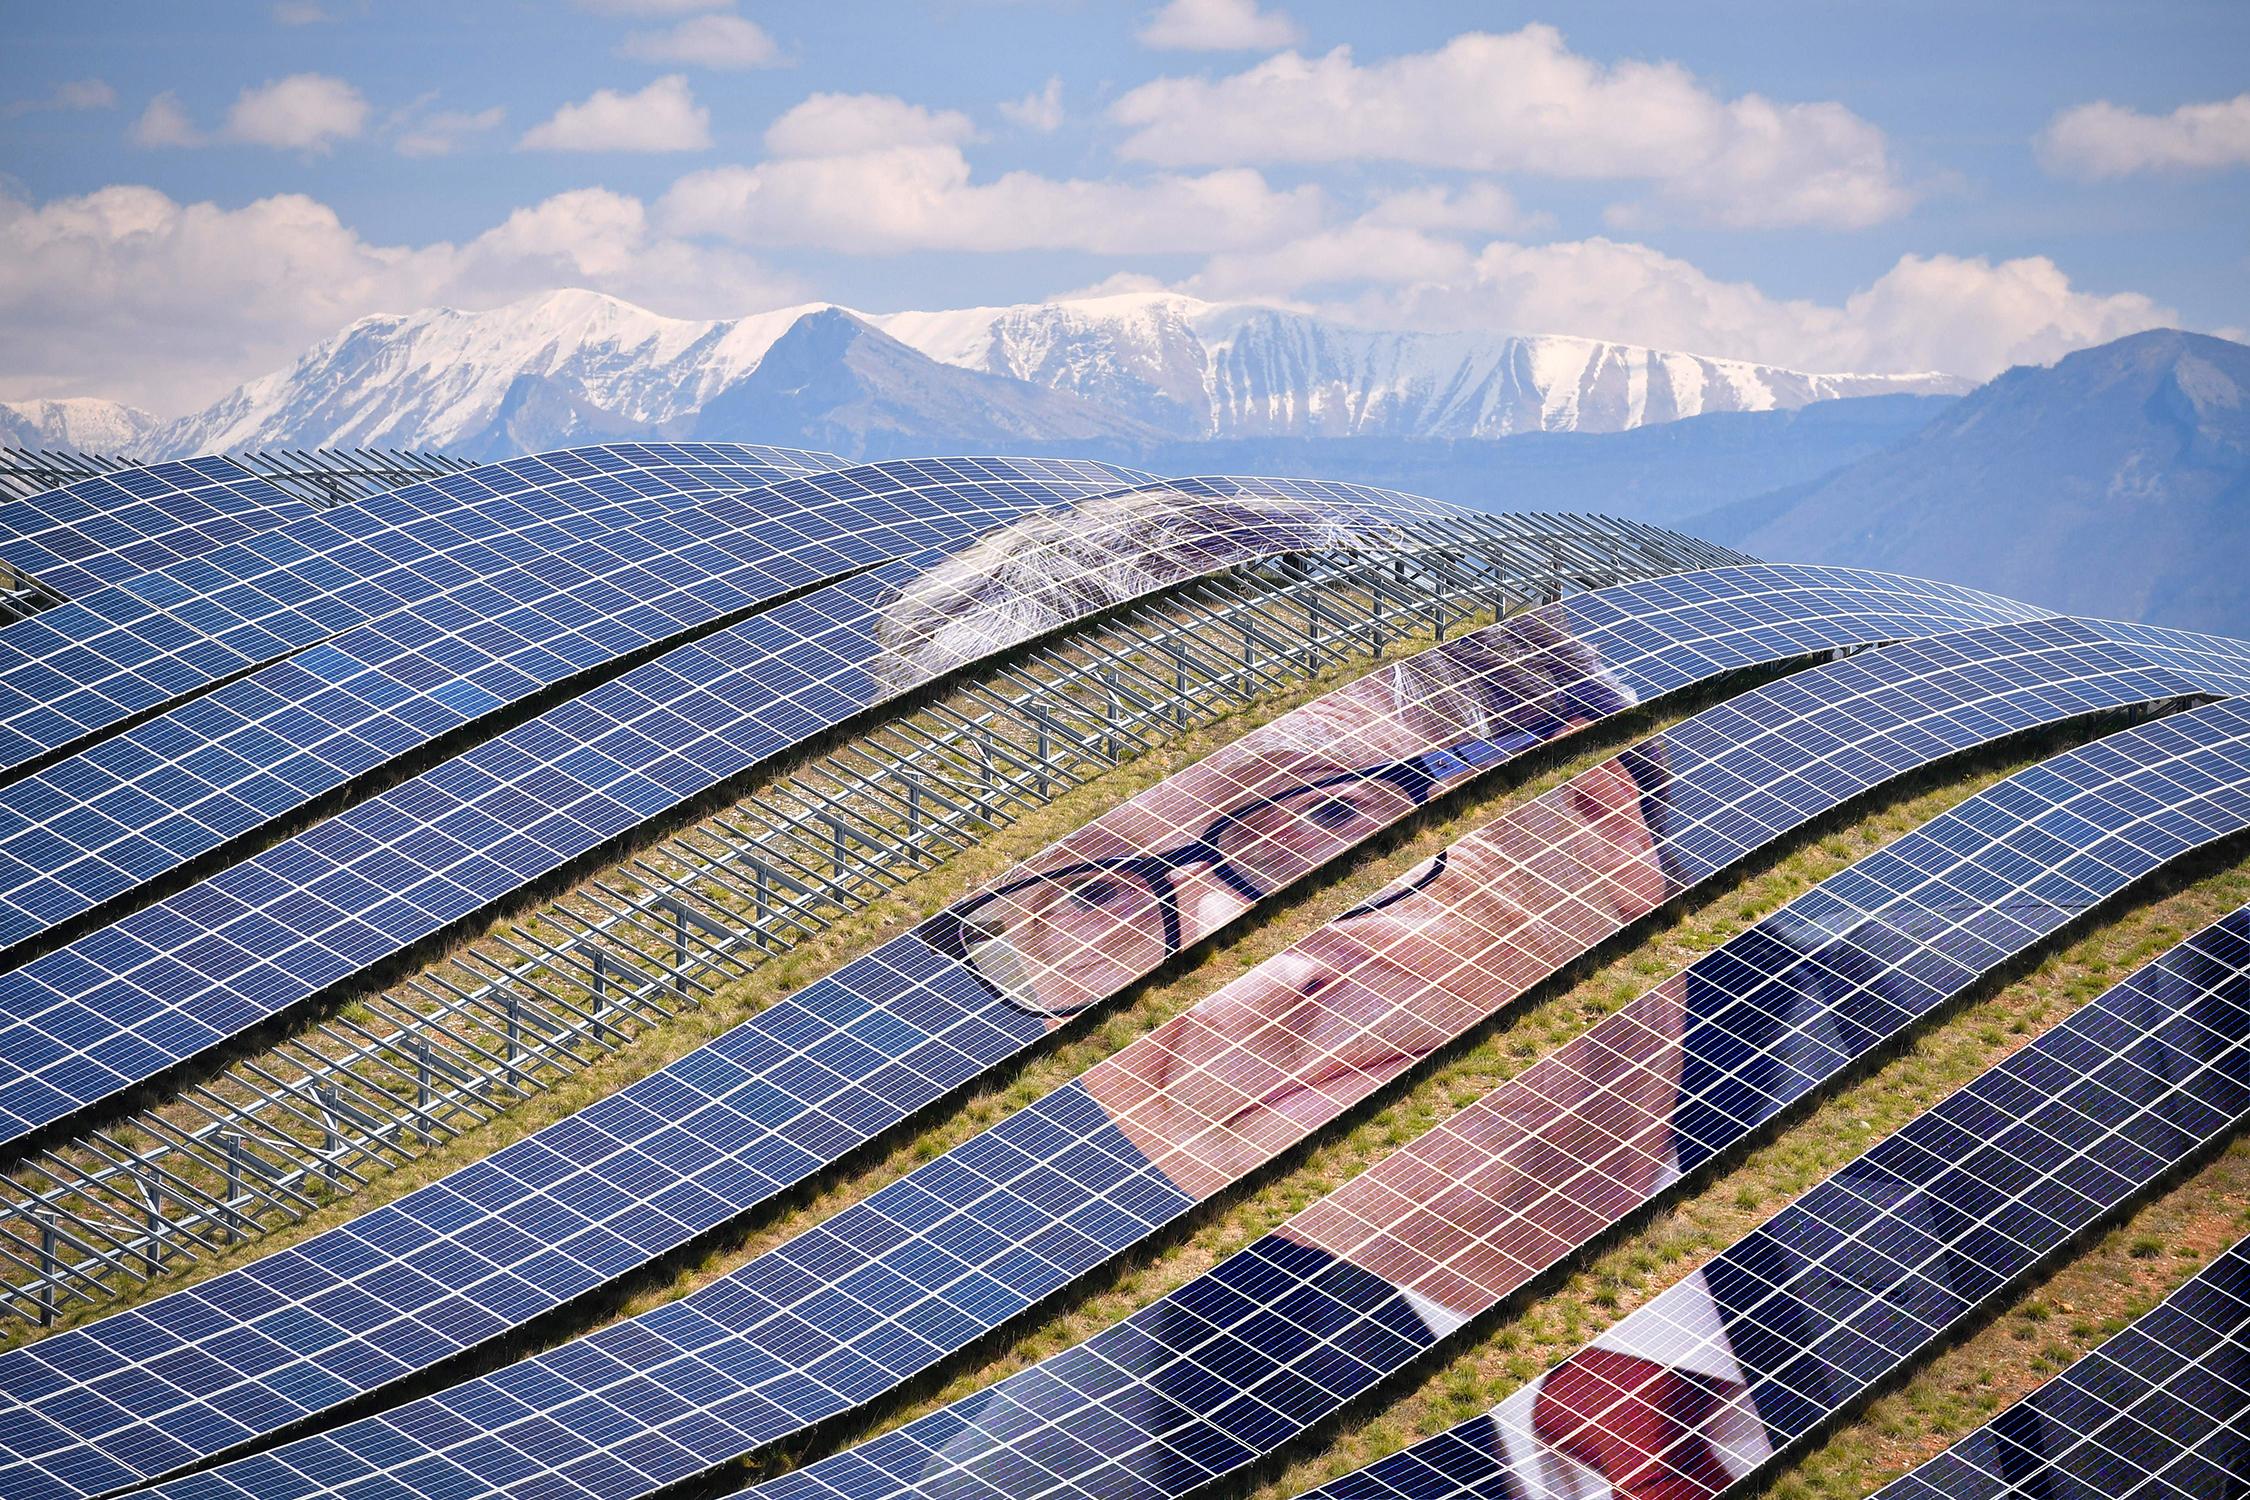 Bill Gates's image on Solar Panels